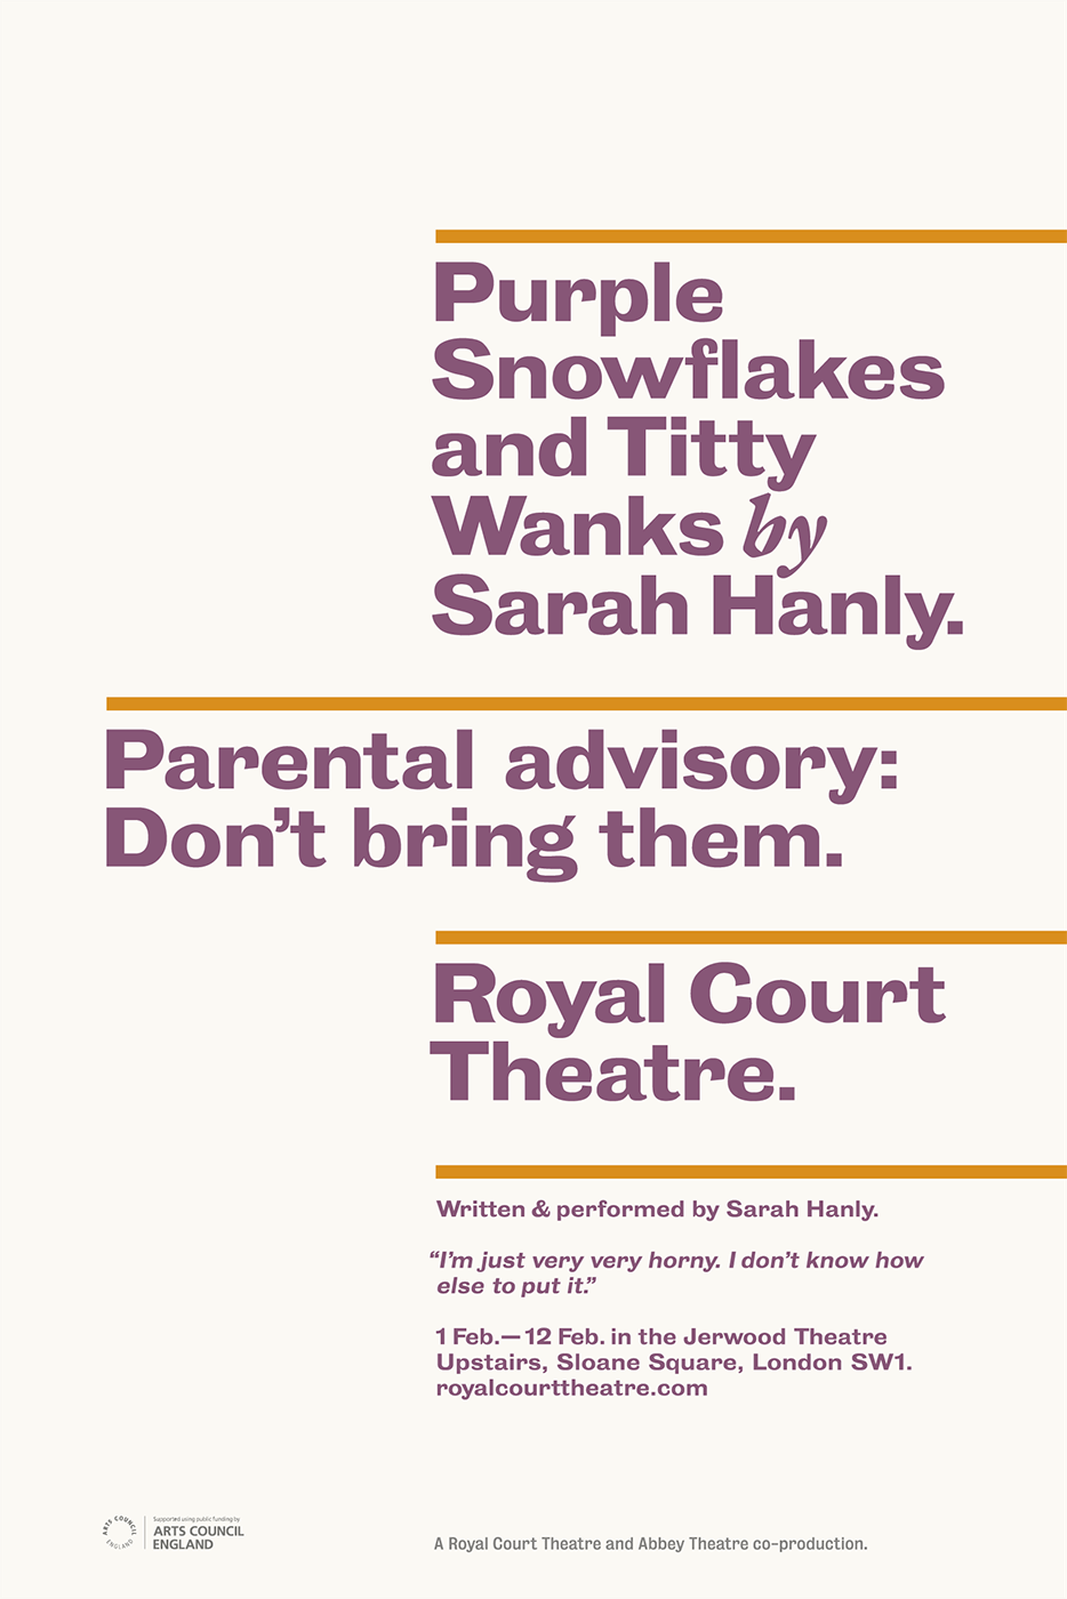 paul_belford_ltd_royal_court_theatre_purple_snowflakes.png